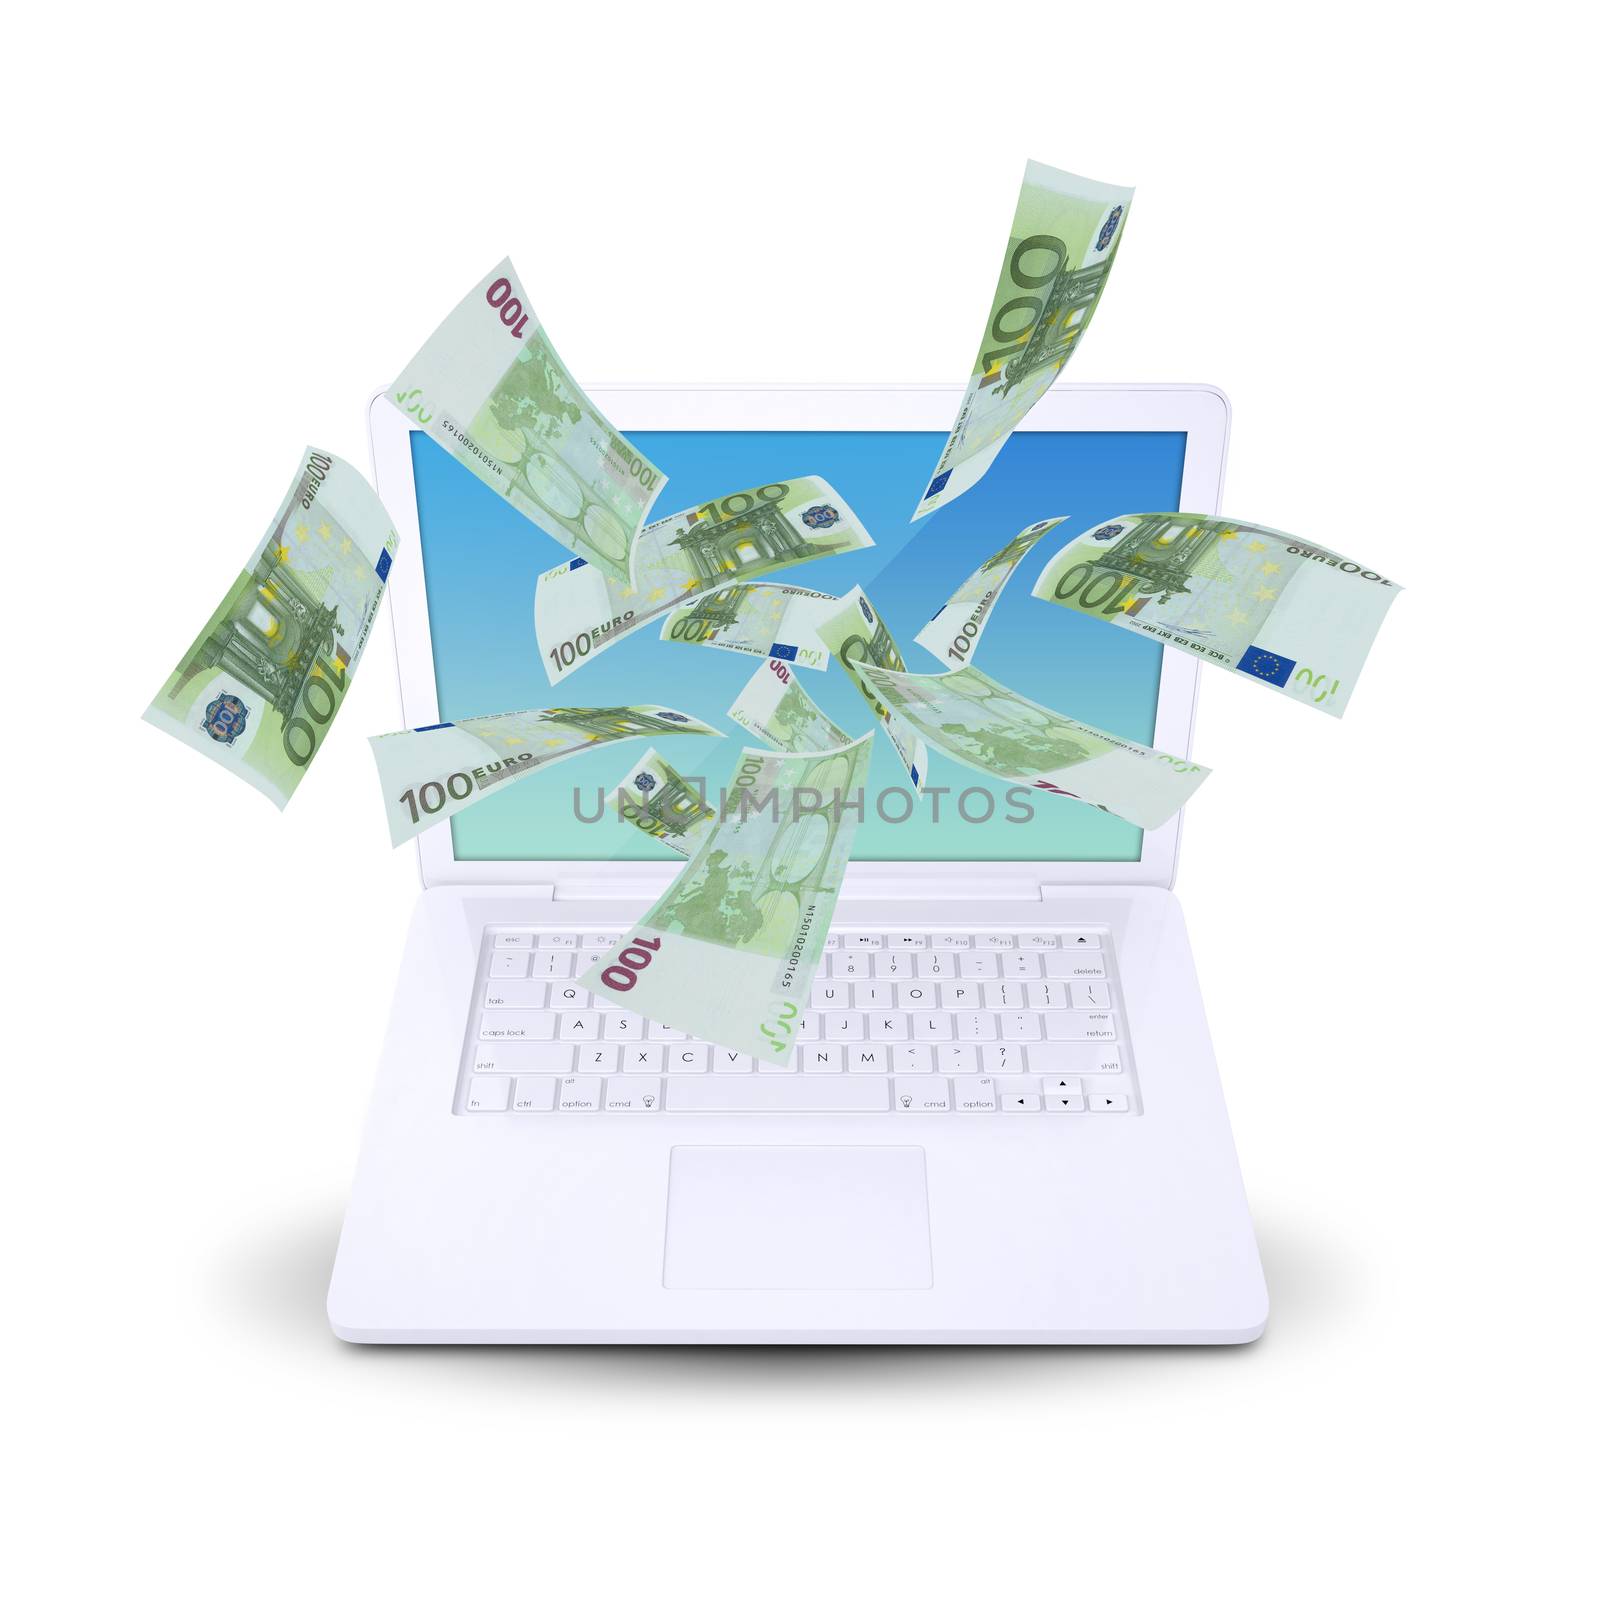 Euro notes flying around the laptop. Isolated on white background